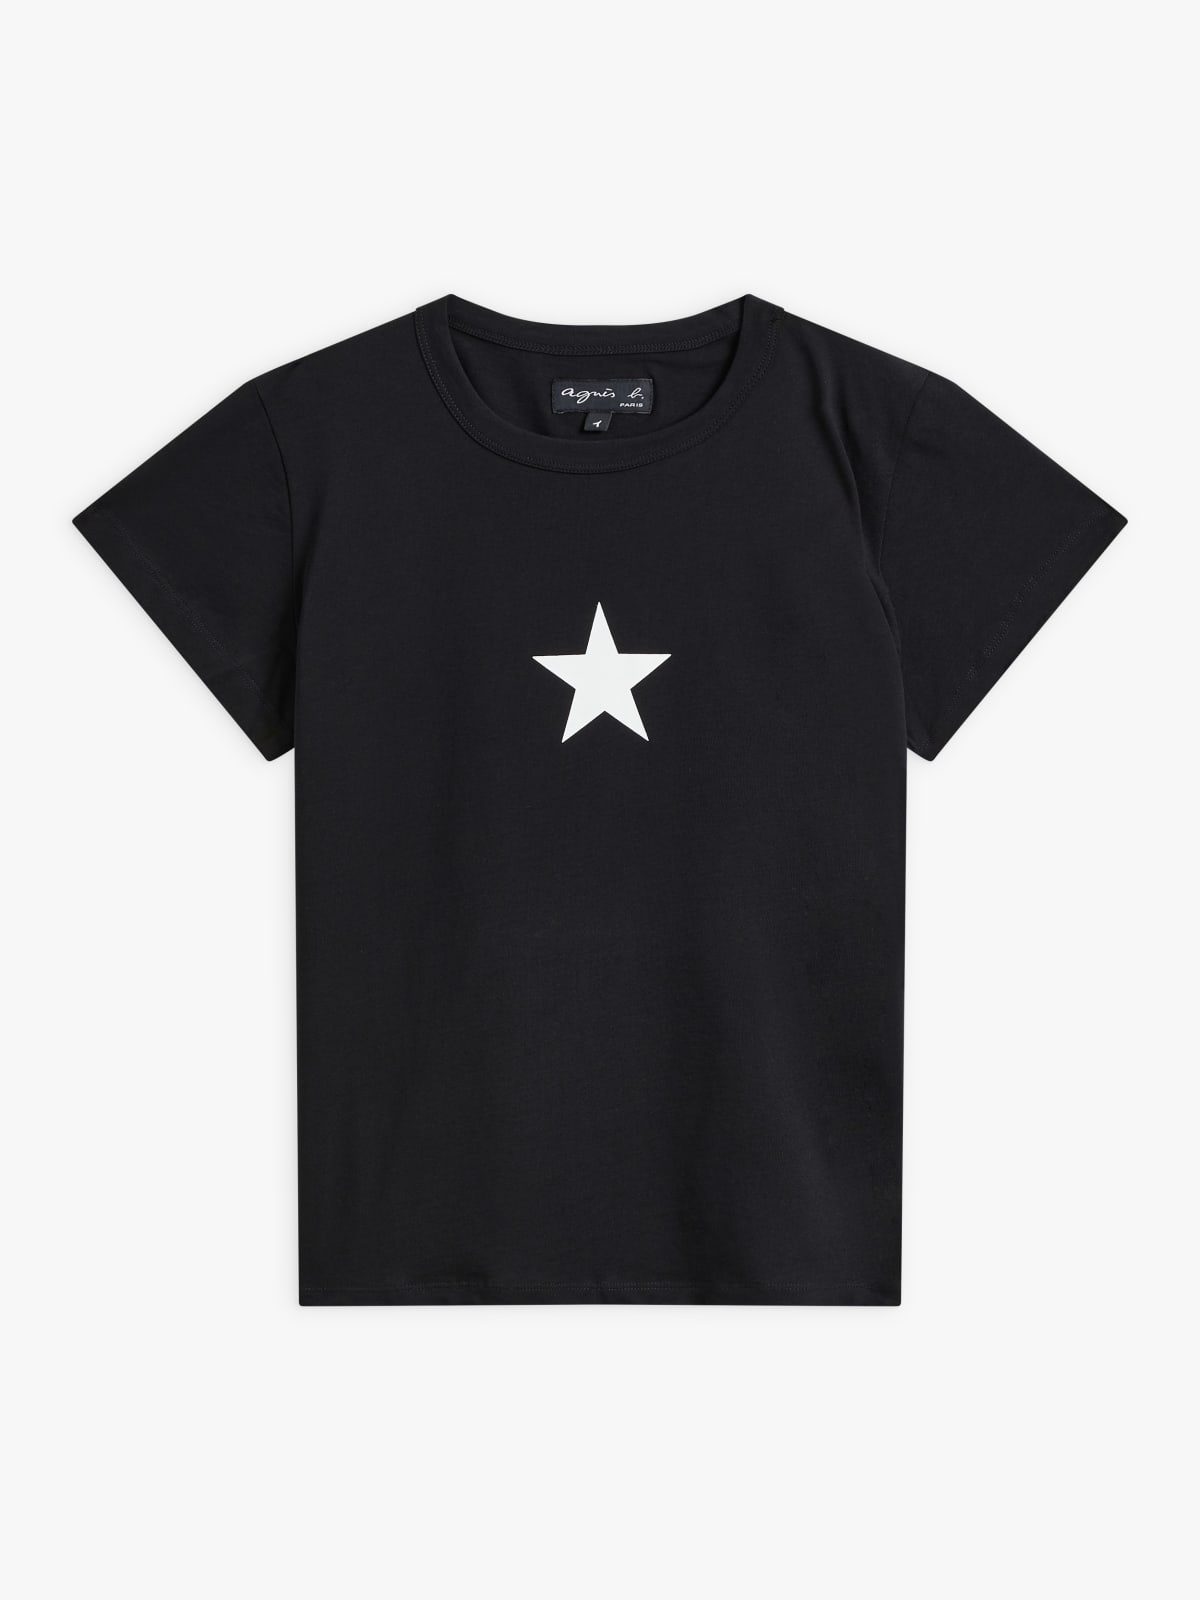 black cotton Brando star t-shirt